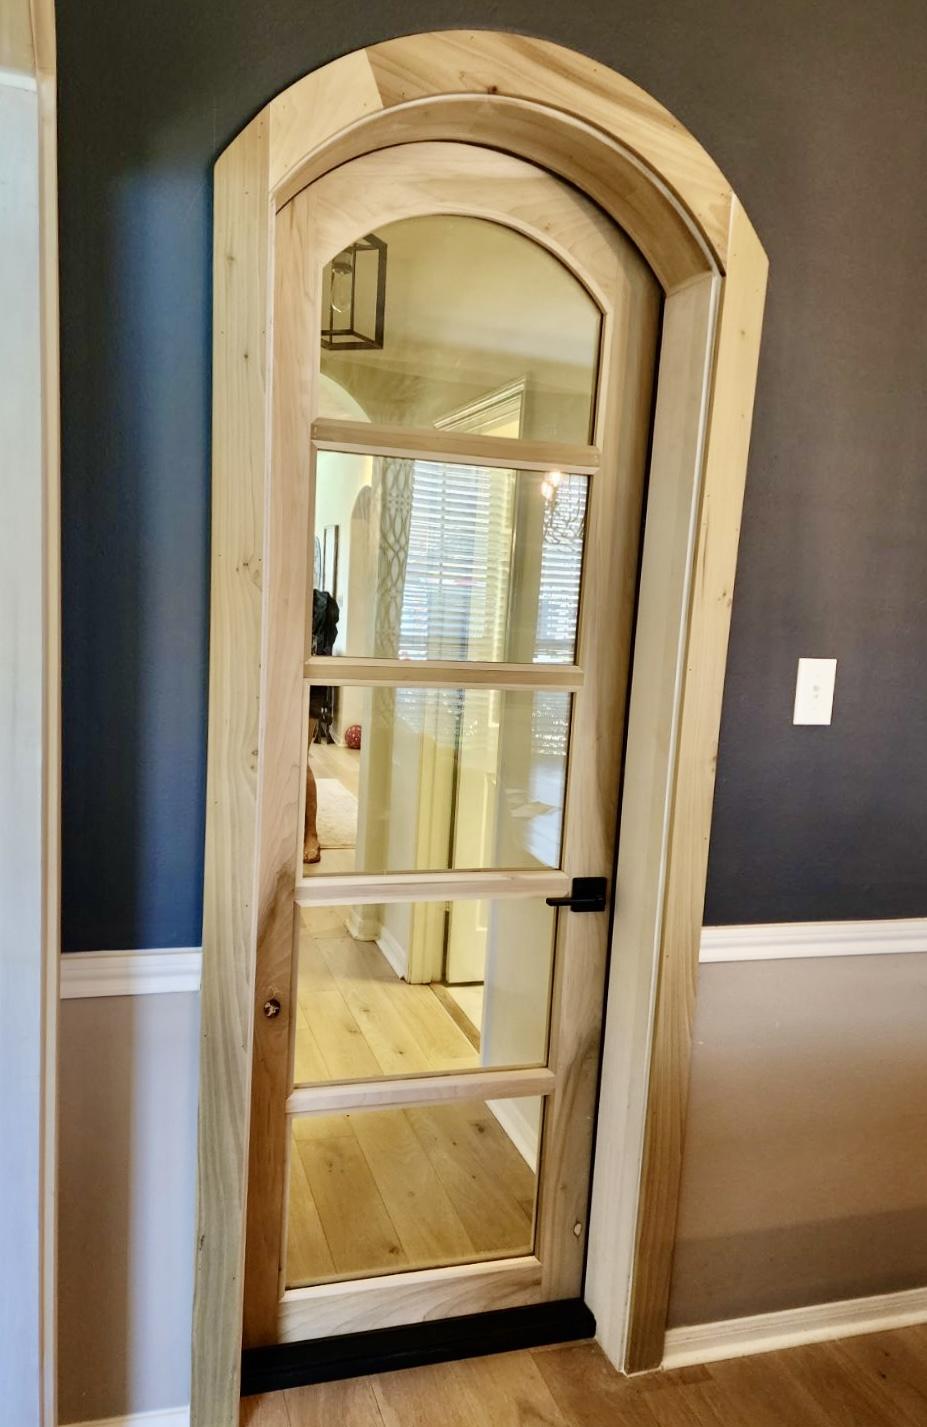 A door with a mirror

Description automatically generated